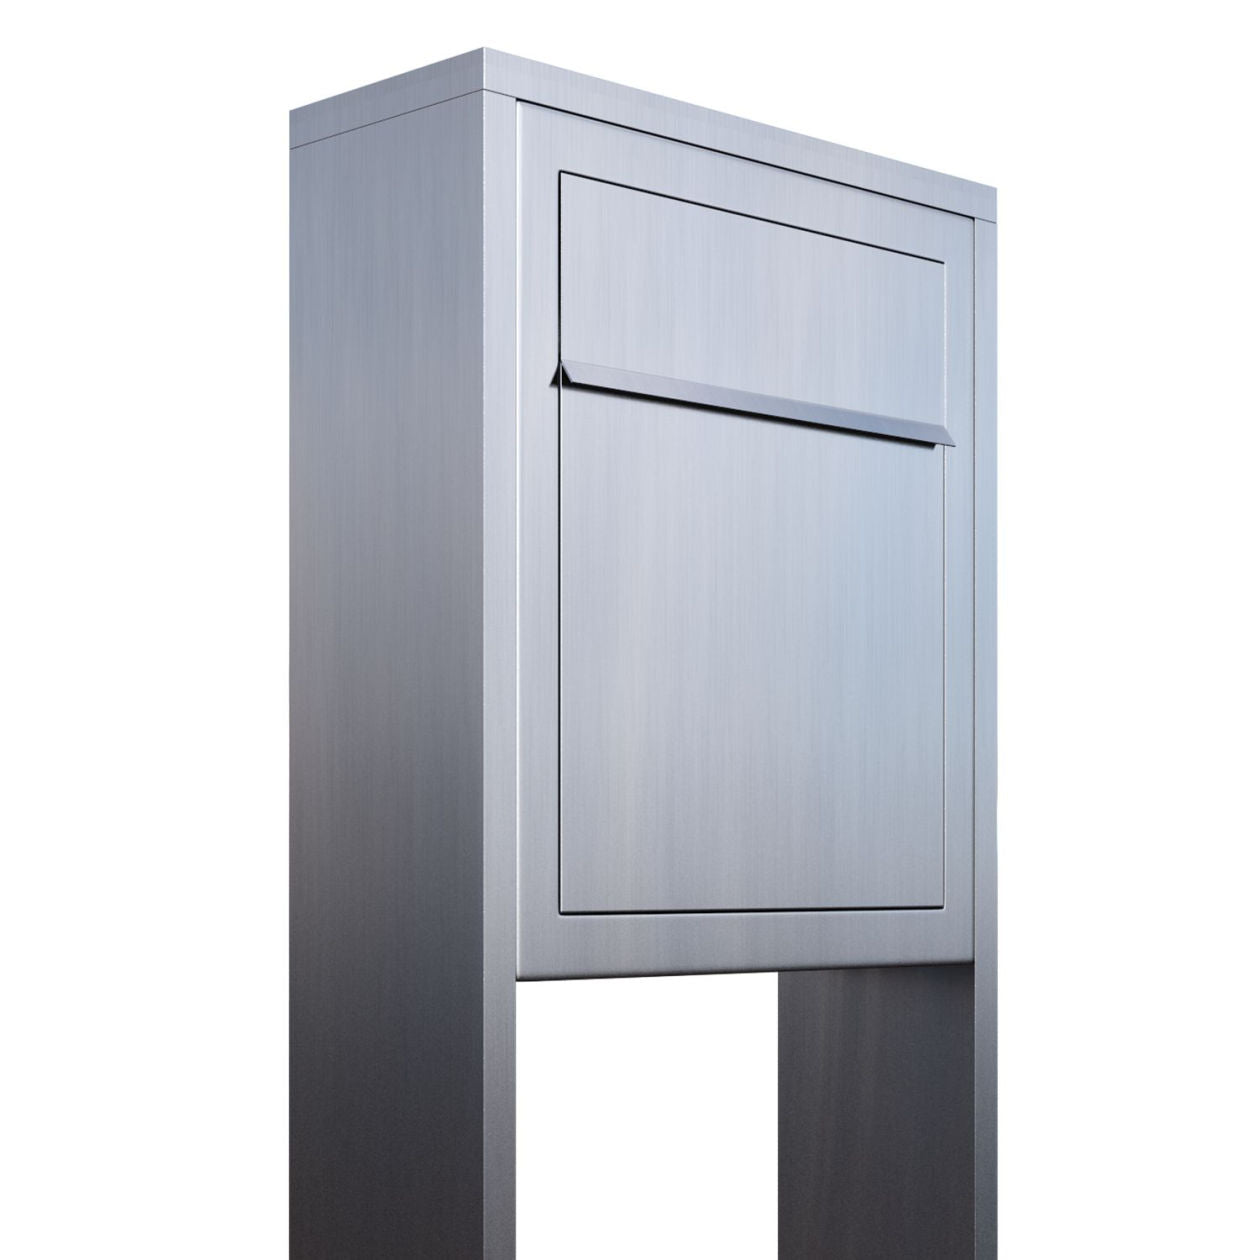 geest terug Jongleren STAND BASE by Bravios - Modern post-mounted stainless steel mailbox